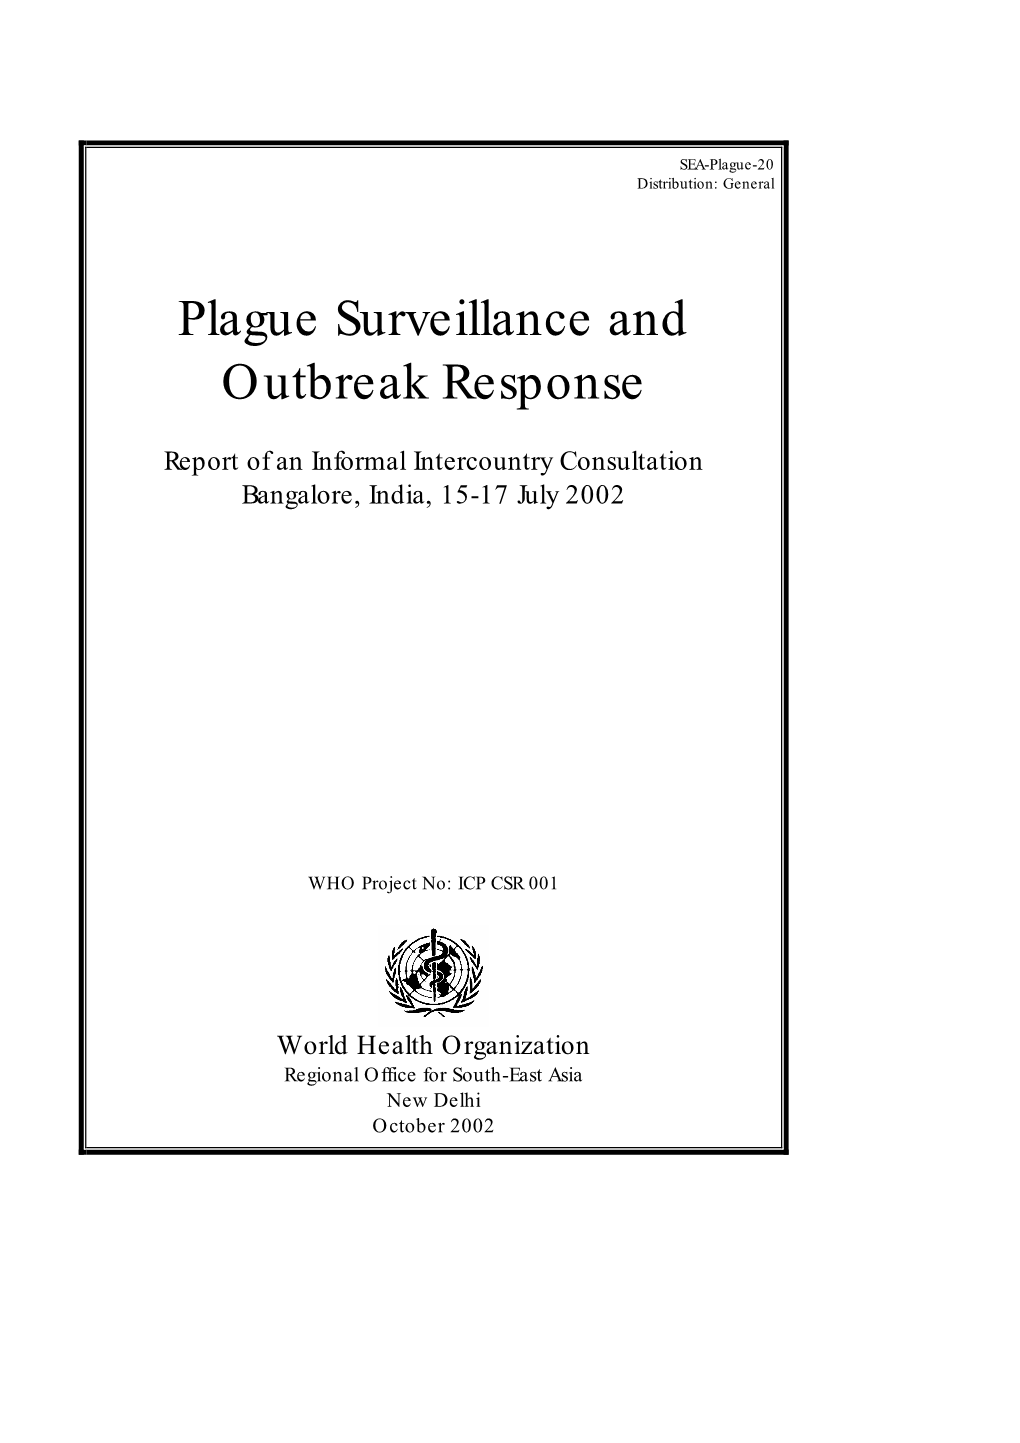 Plague Surveillance and Outbreak Response